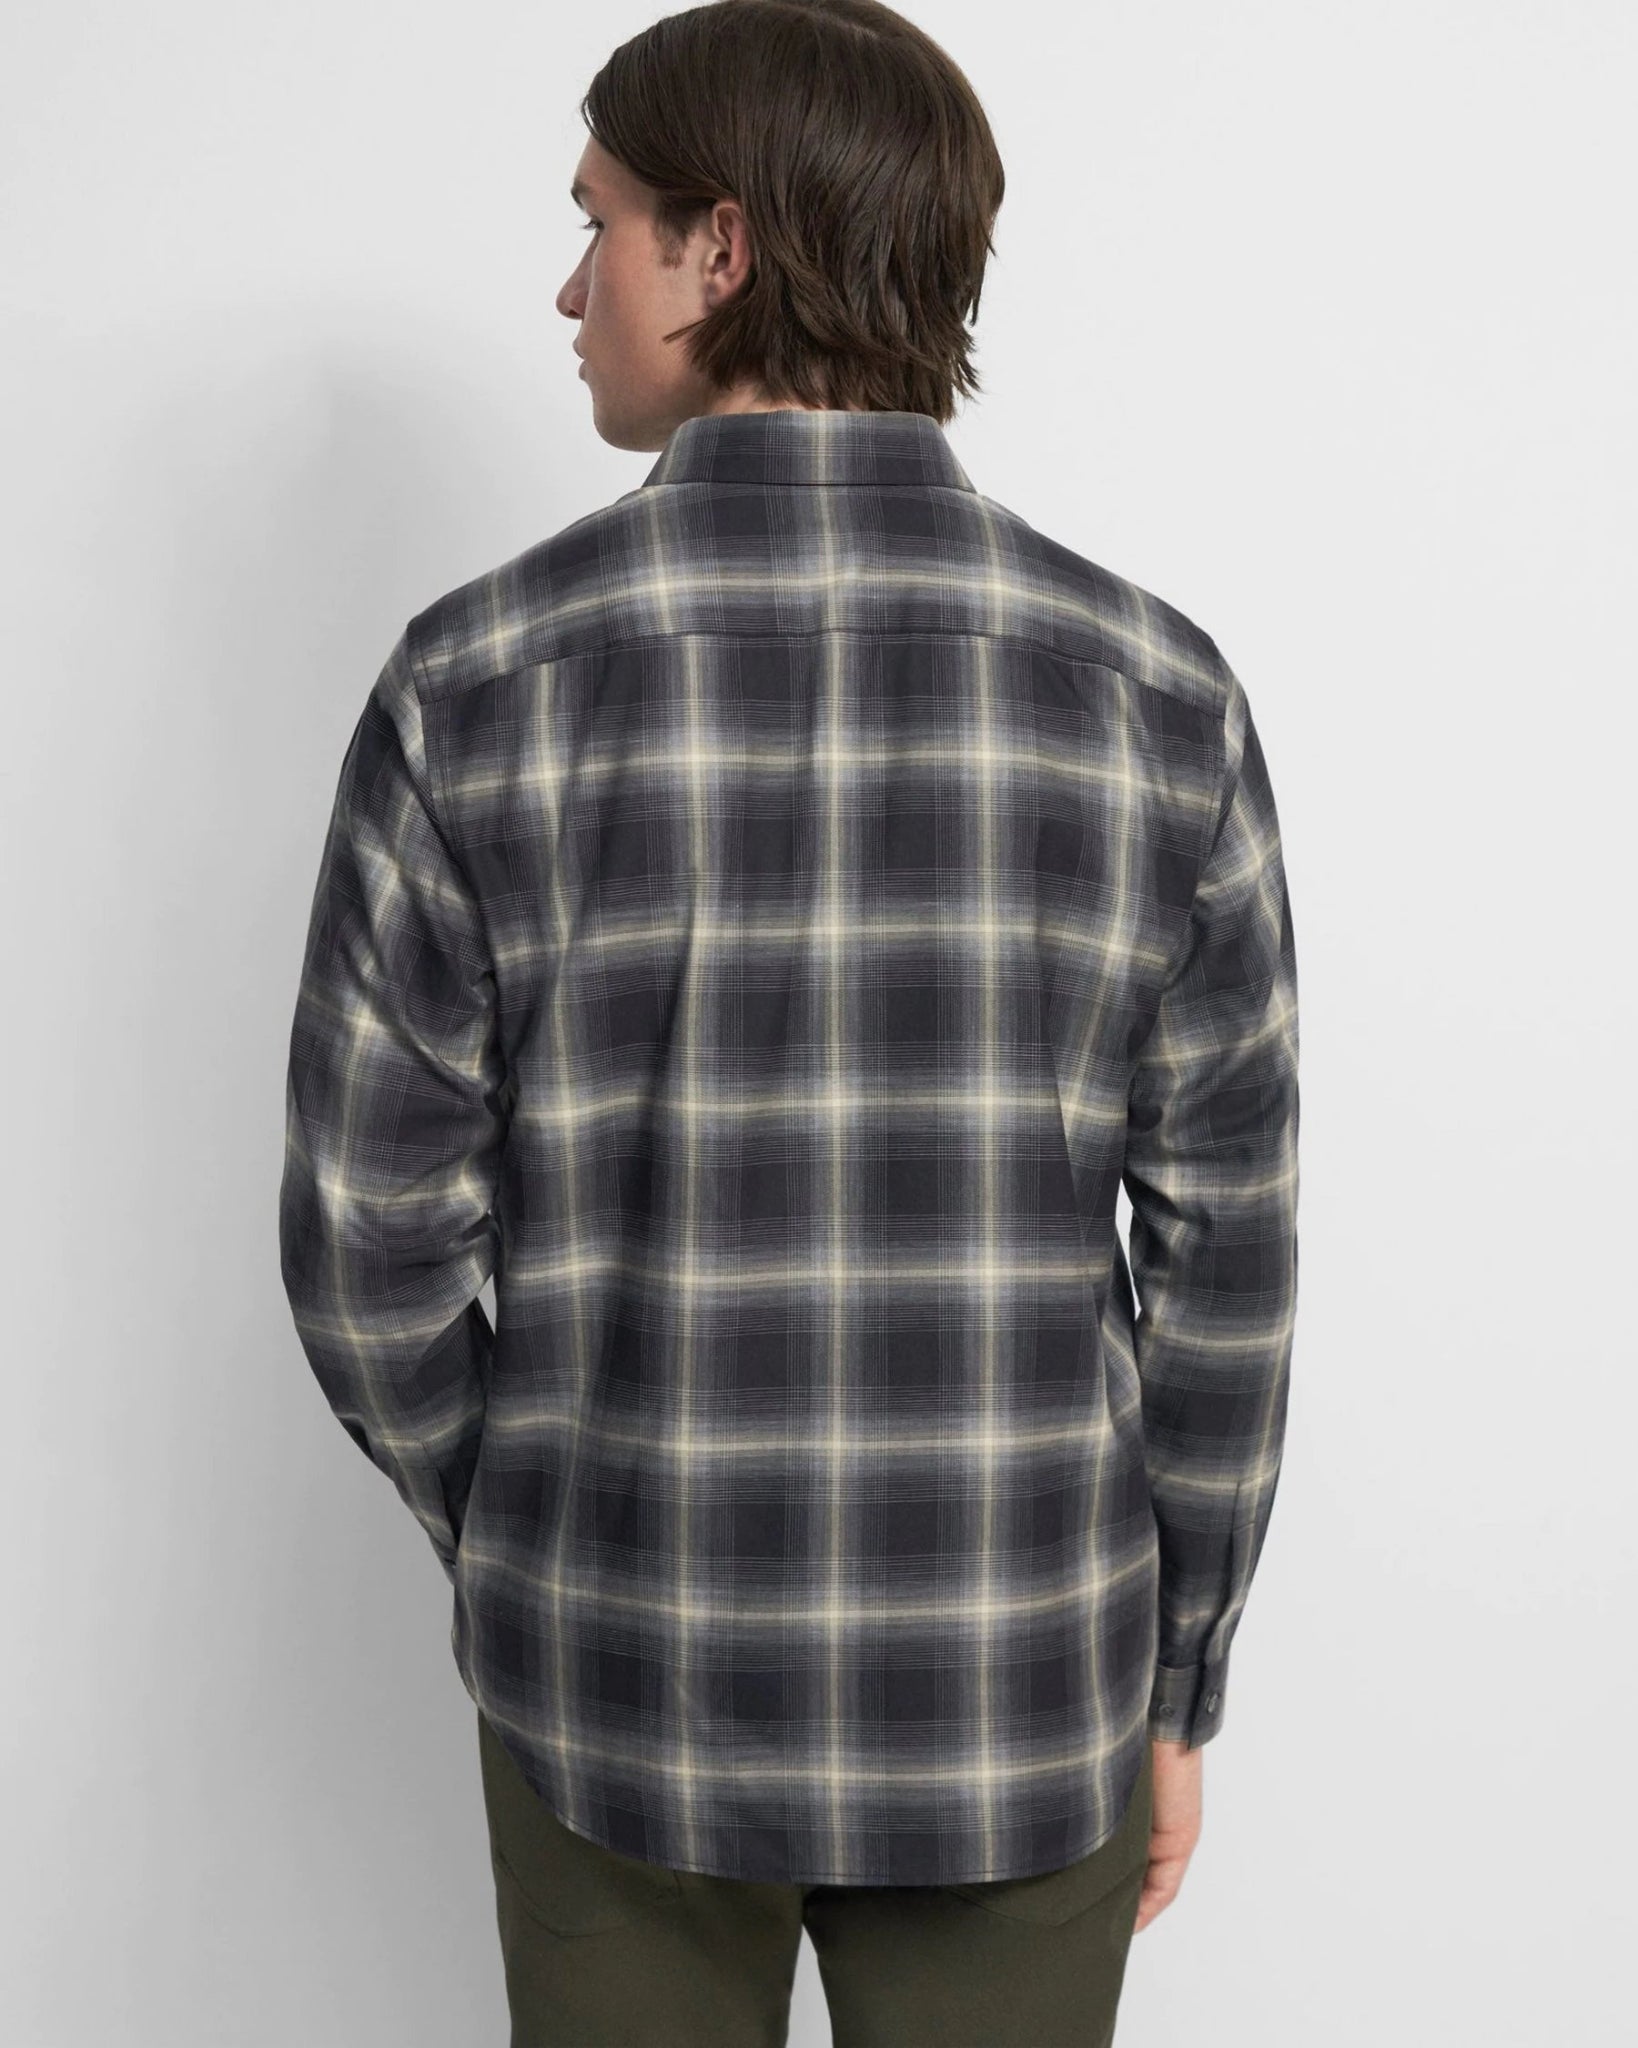 Theory Irving Shirt Cotton Flannel in Black Multi - Estilo Boutique